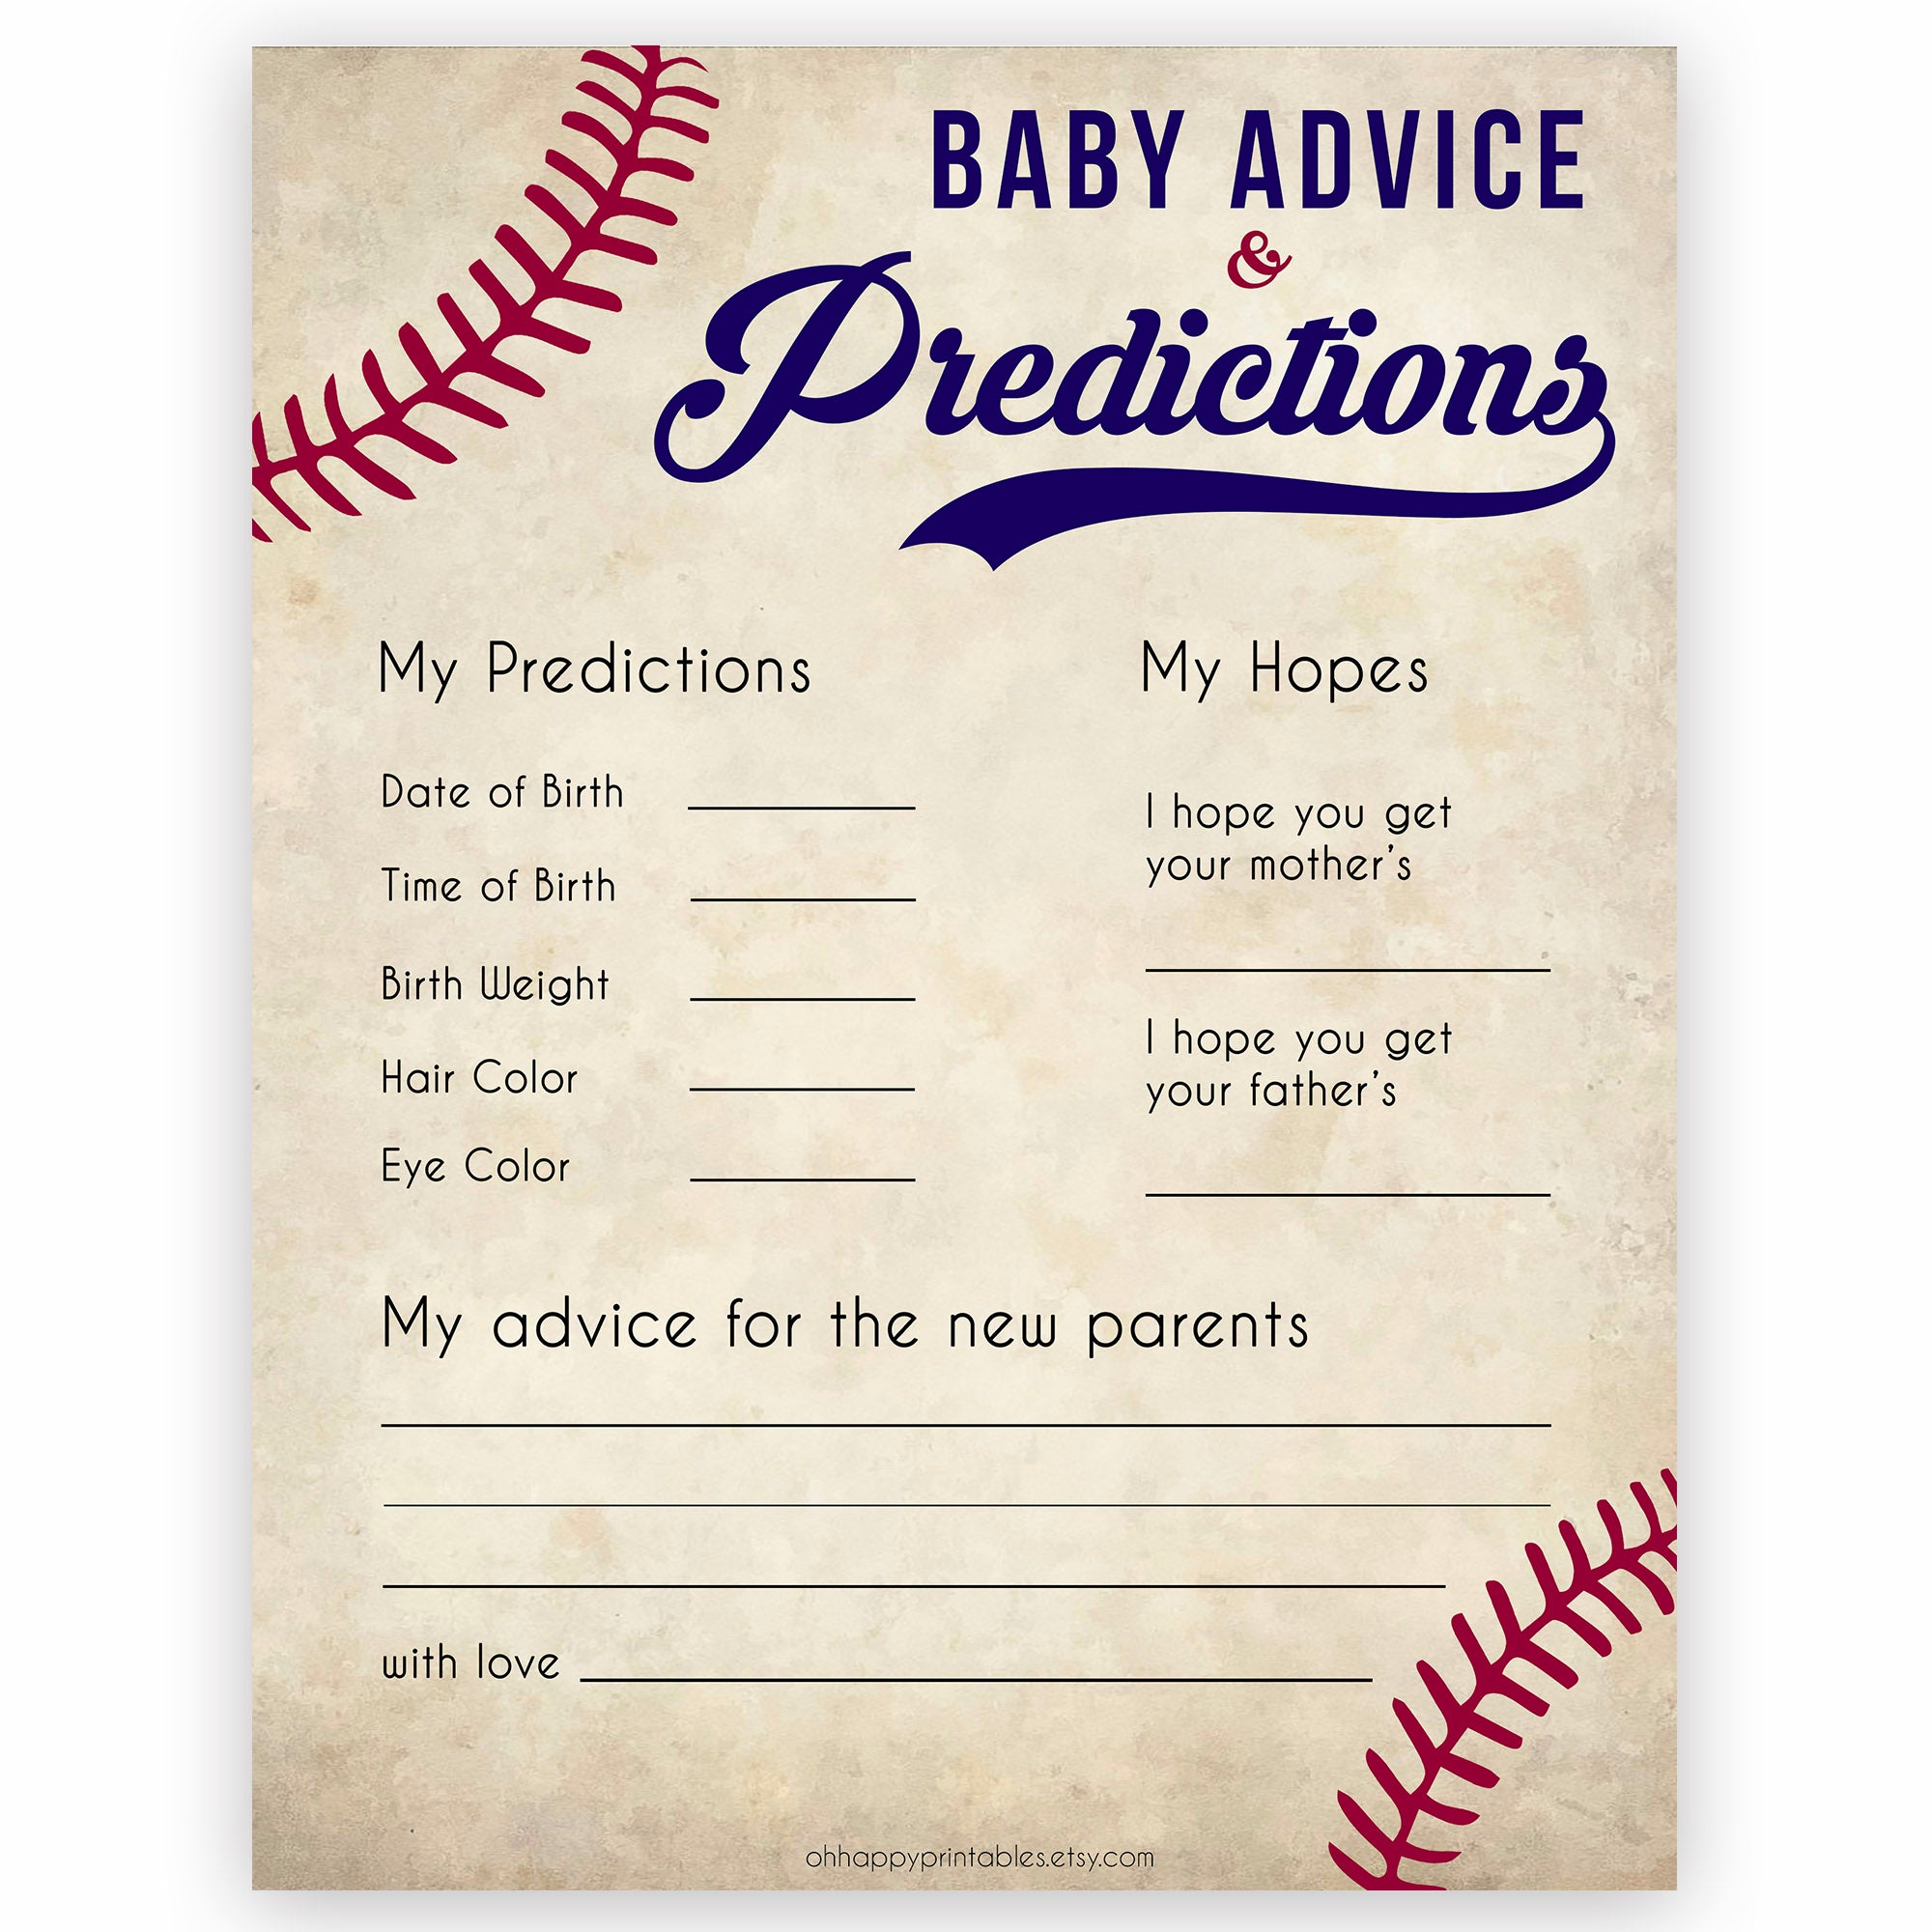 baby advice and predictions baseball theme baby shower games, baseball baby games, baseball baby shower themes